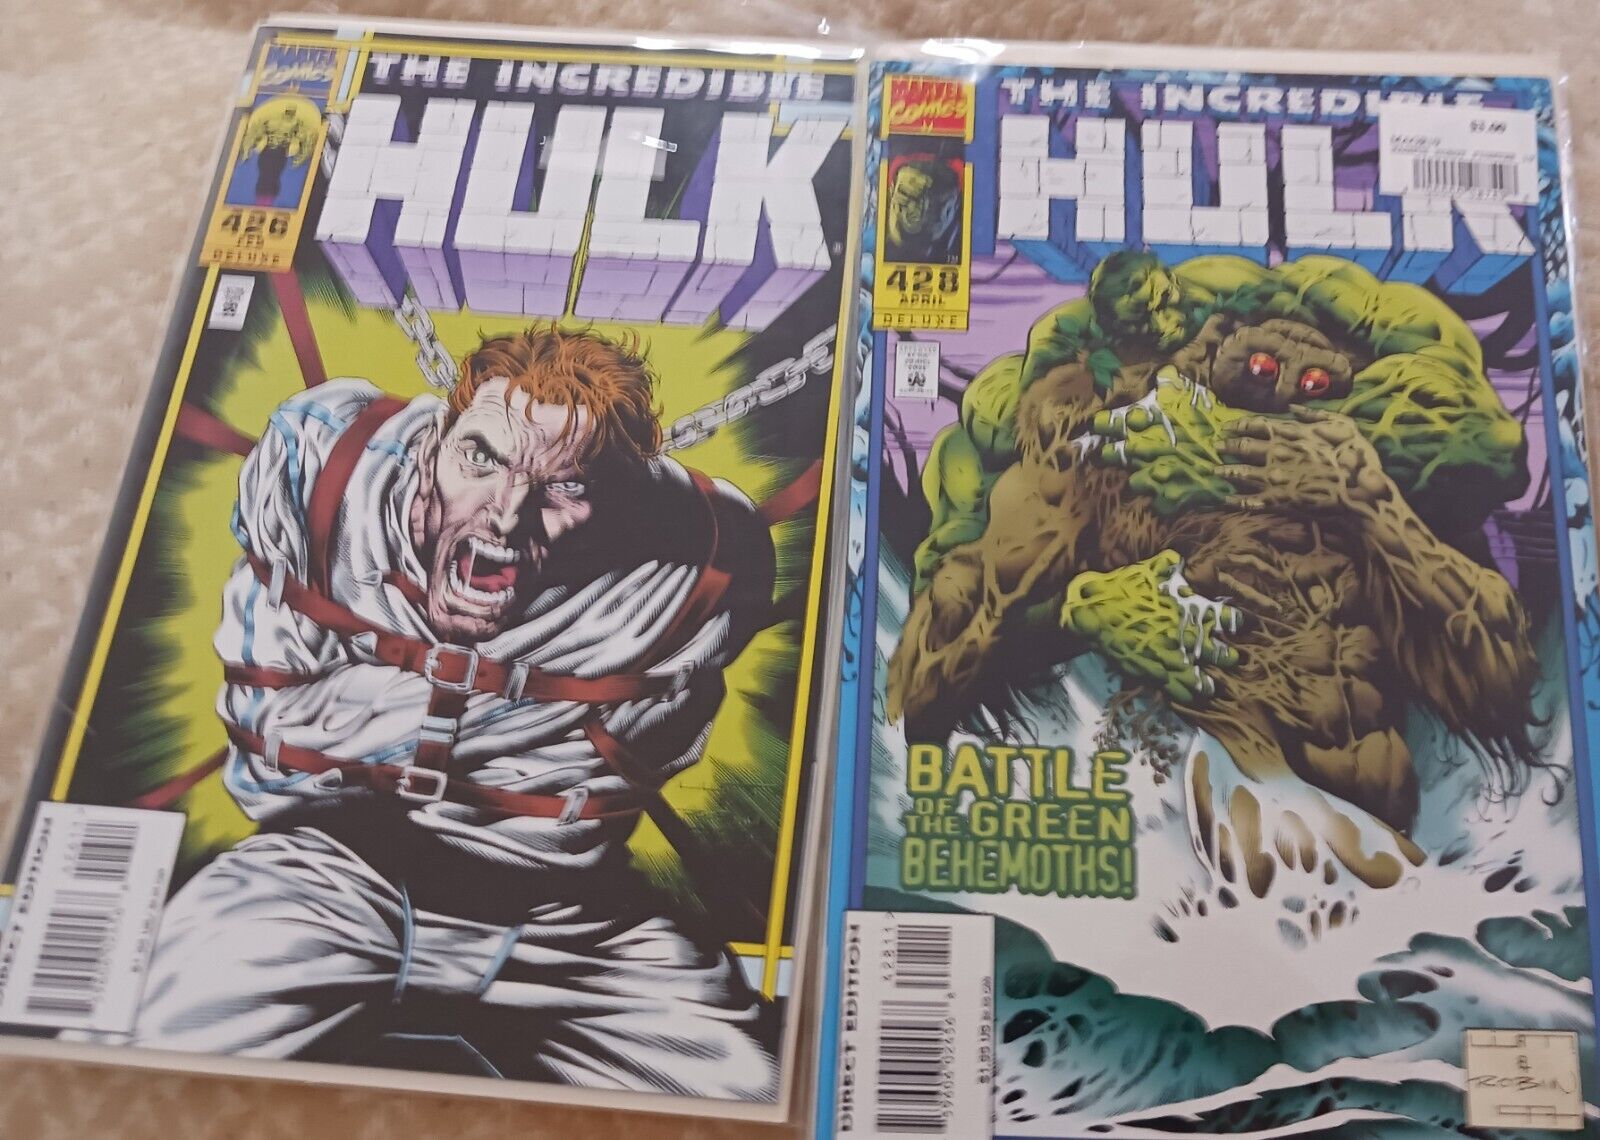 Incredible Hulk - Peter David - FULL RUN - Lot 3 of 3 - 426 - 468 + extras